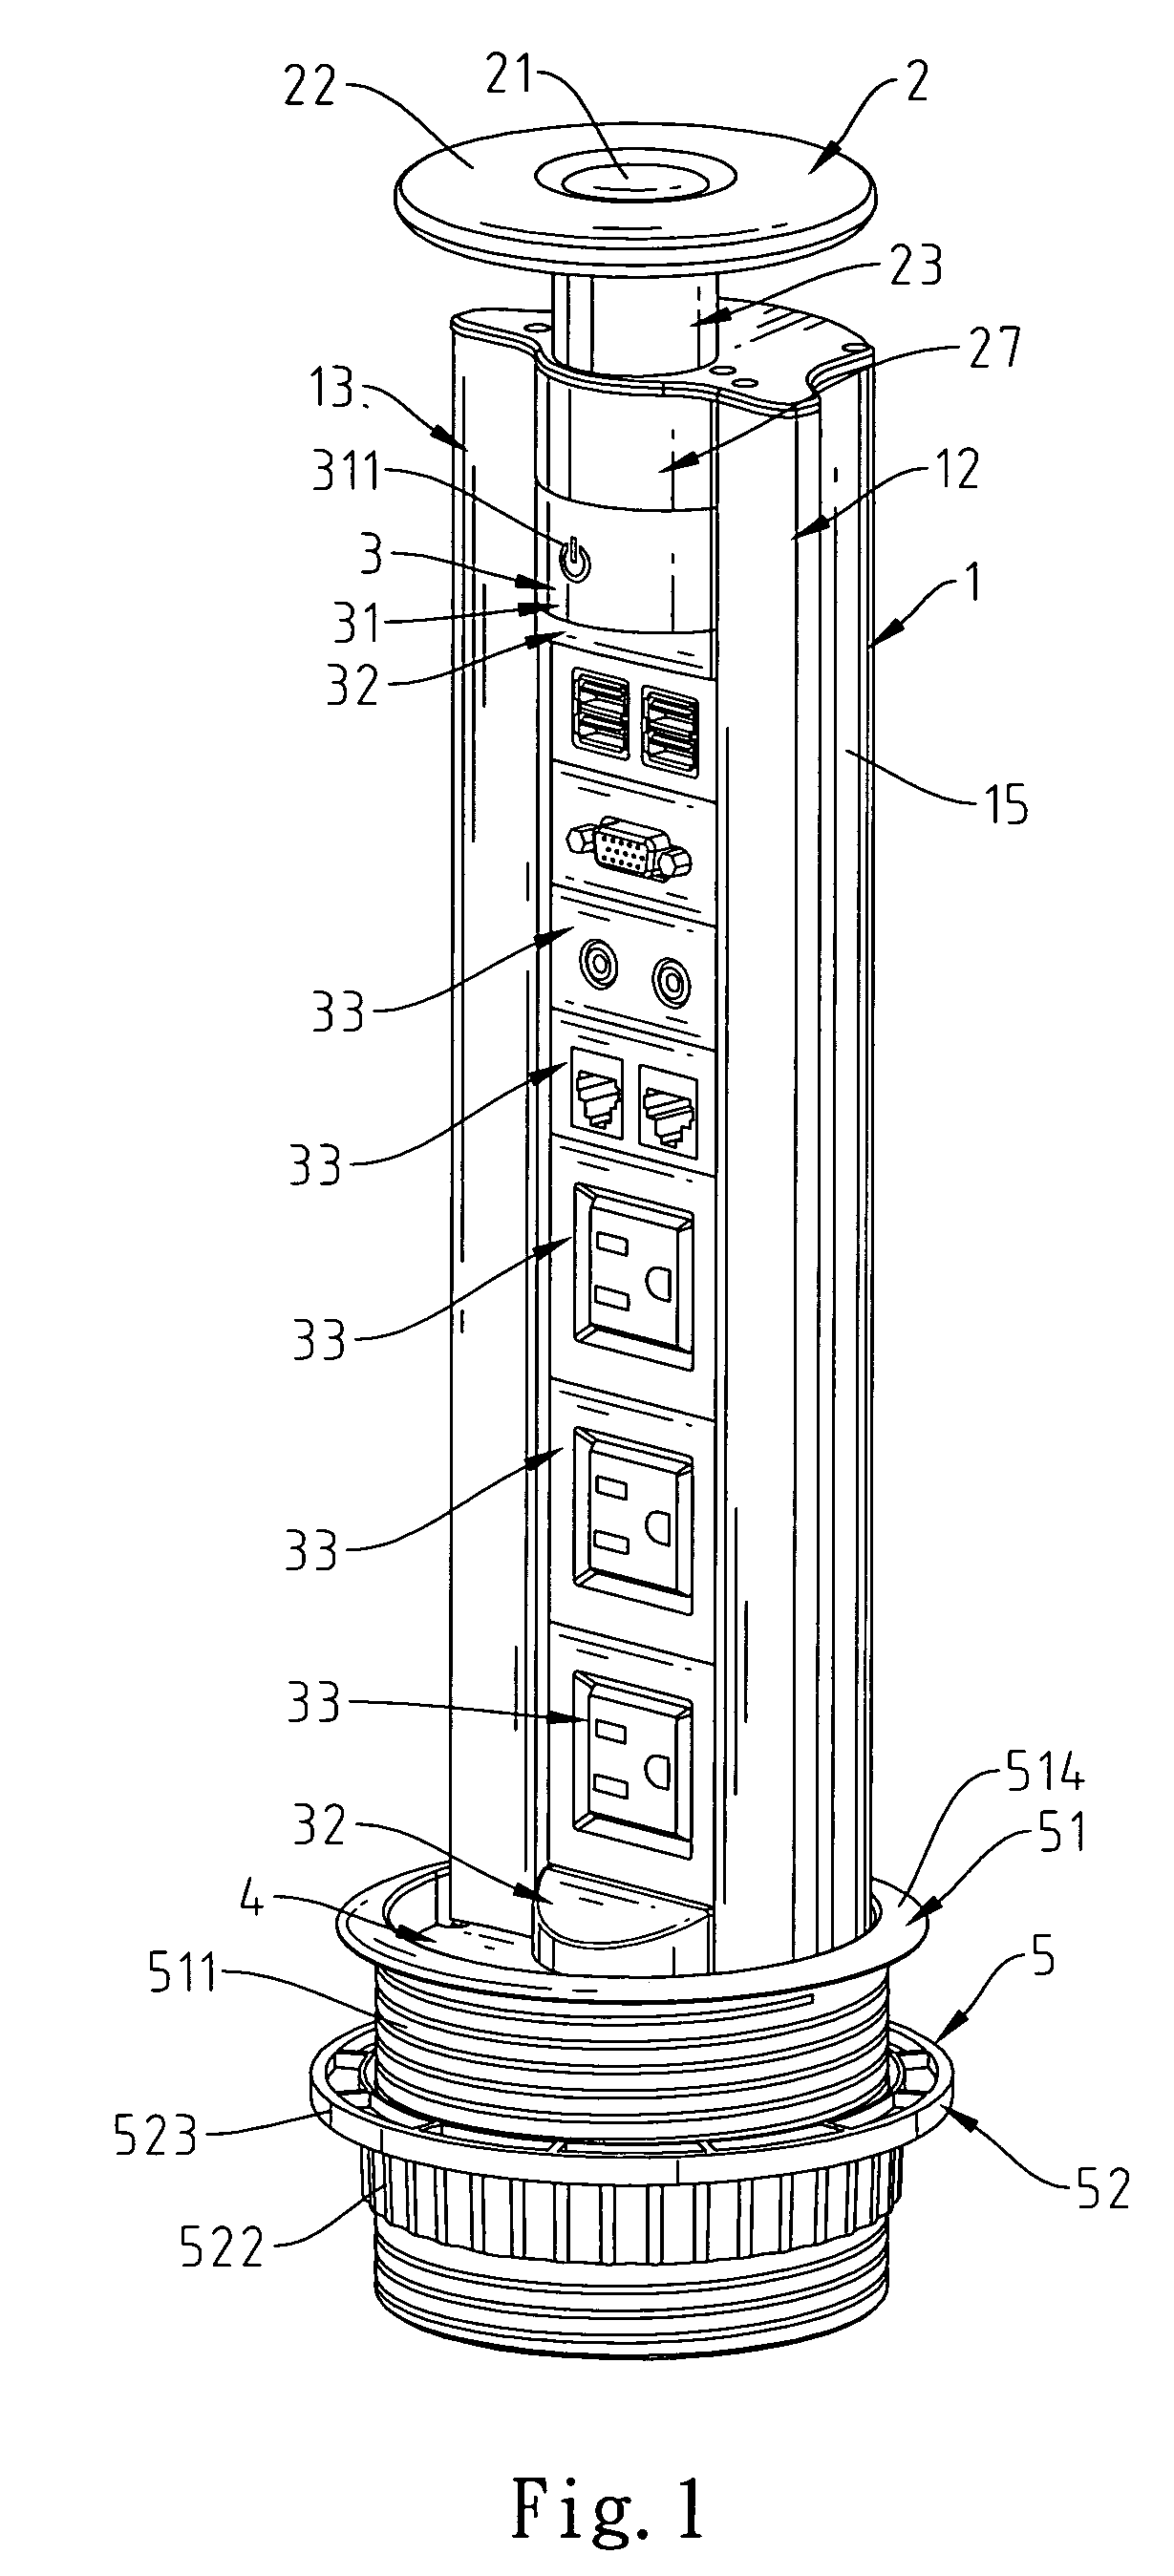 Modular integrated socket apparatus